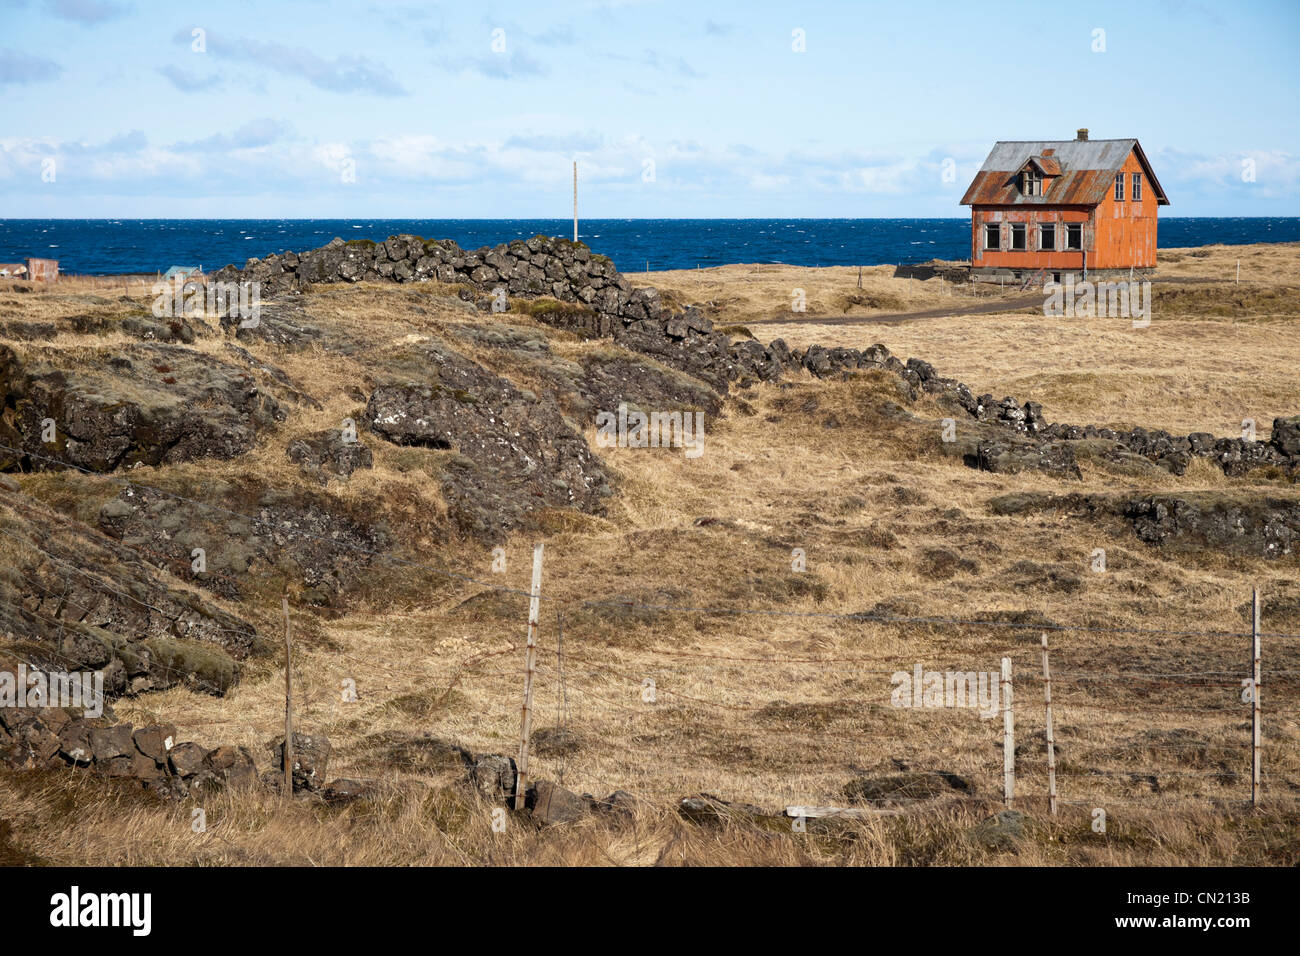 Iceland - Derelict house on headland, Iceland Stock Photo